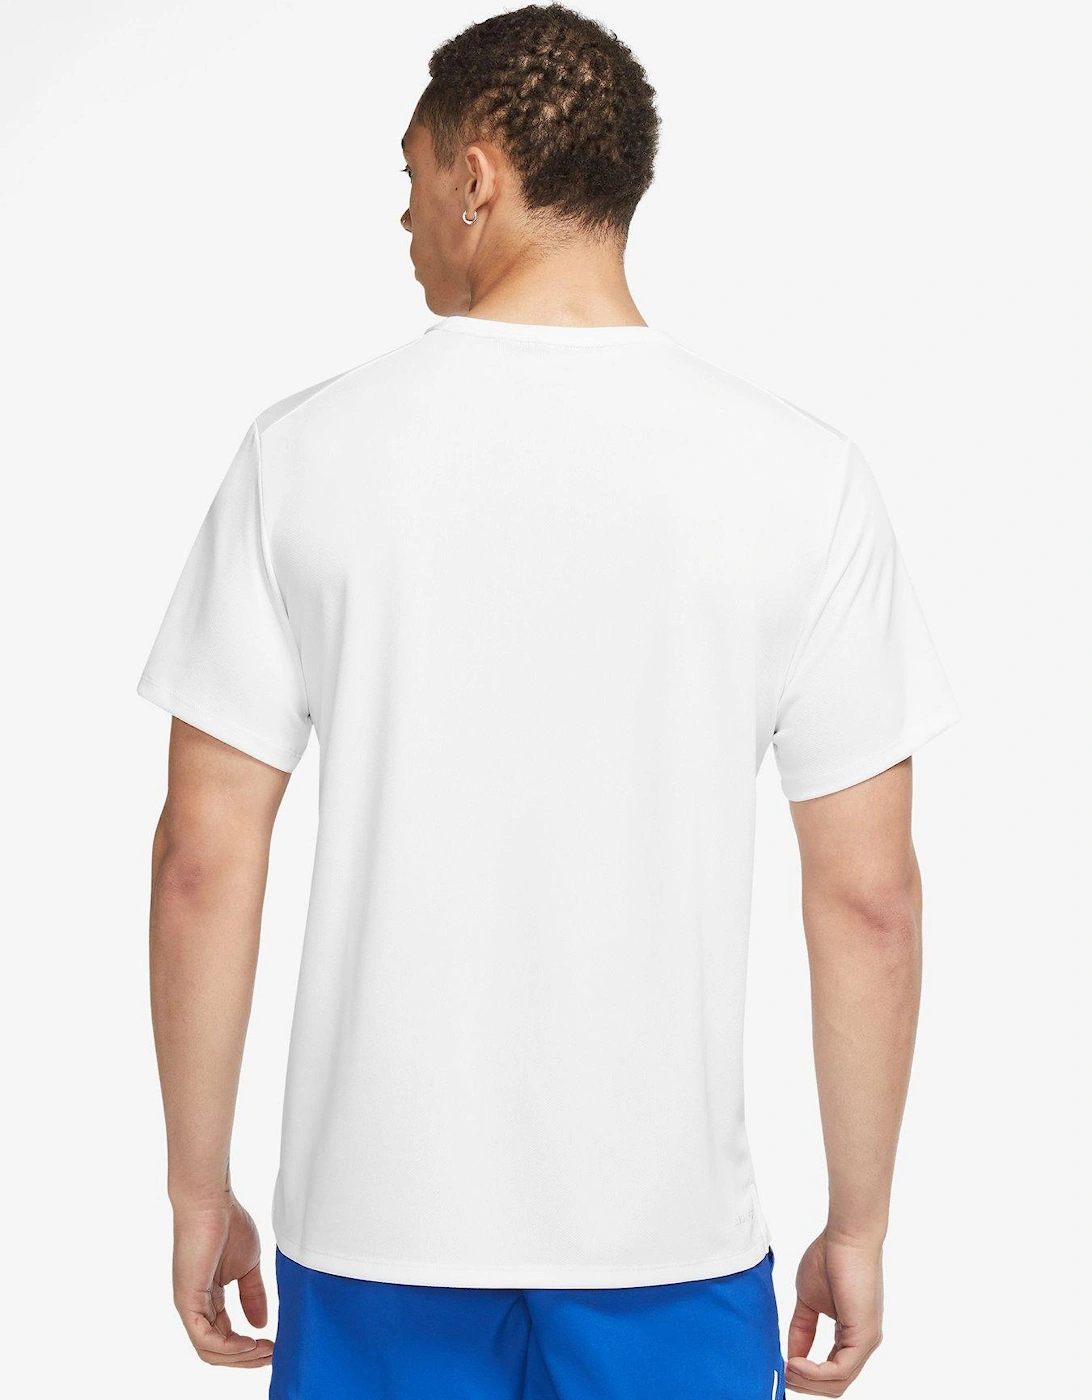 Run Miler T-Shirt - White